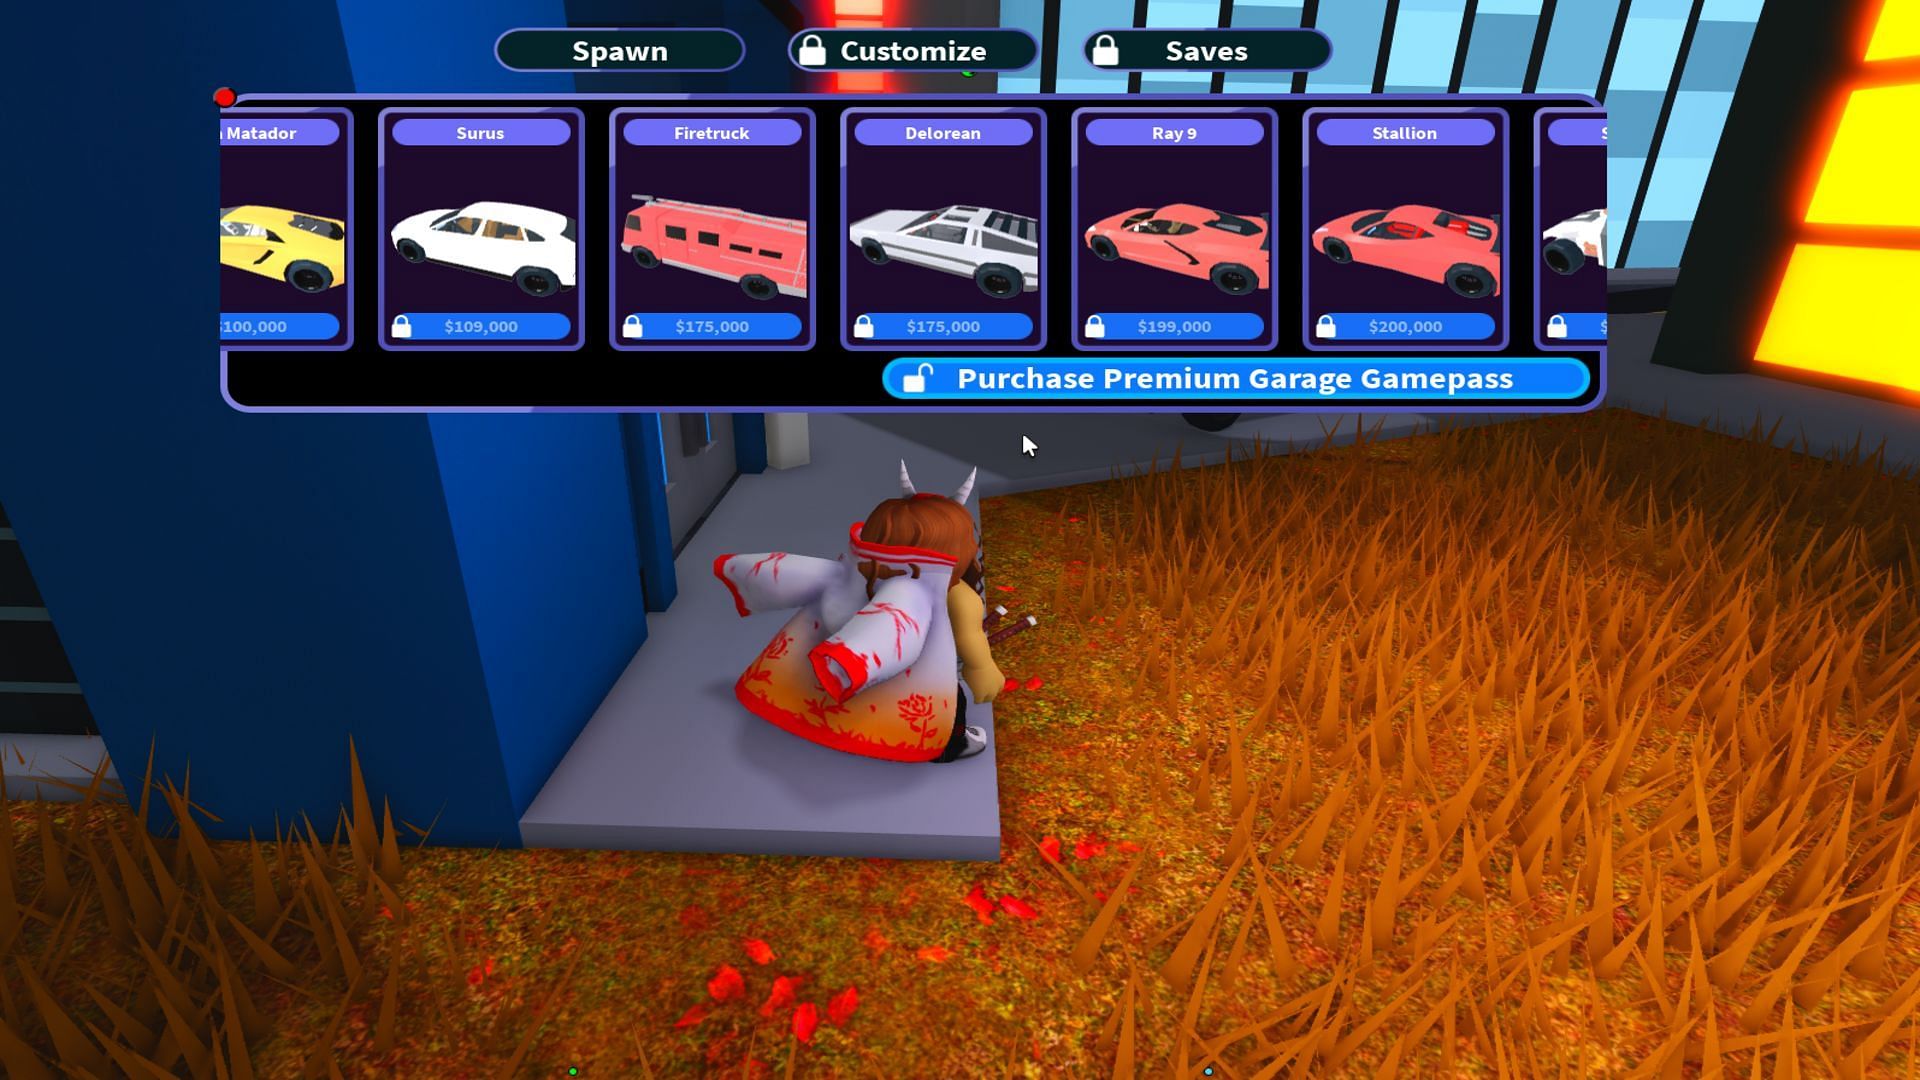 Premium Garage Pass lets players spawn the Delorean (Image via Roblox)